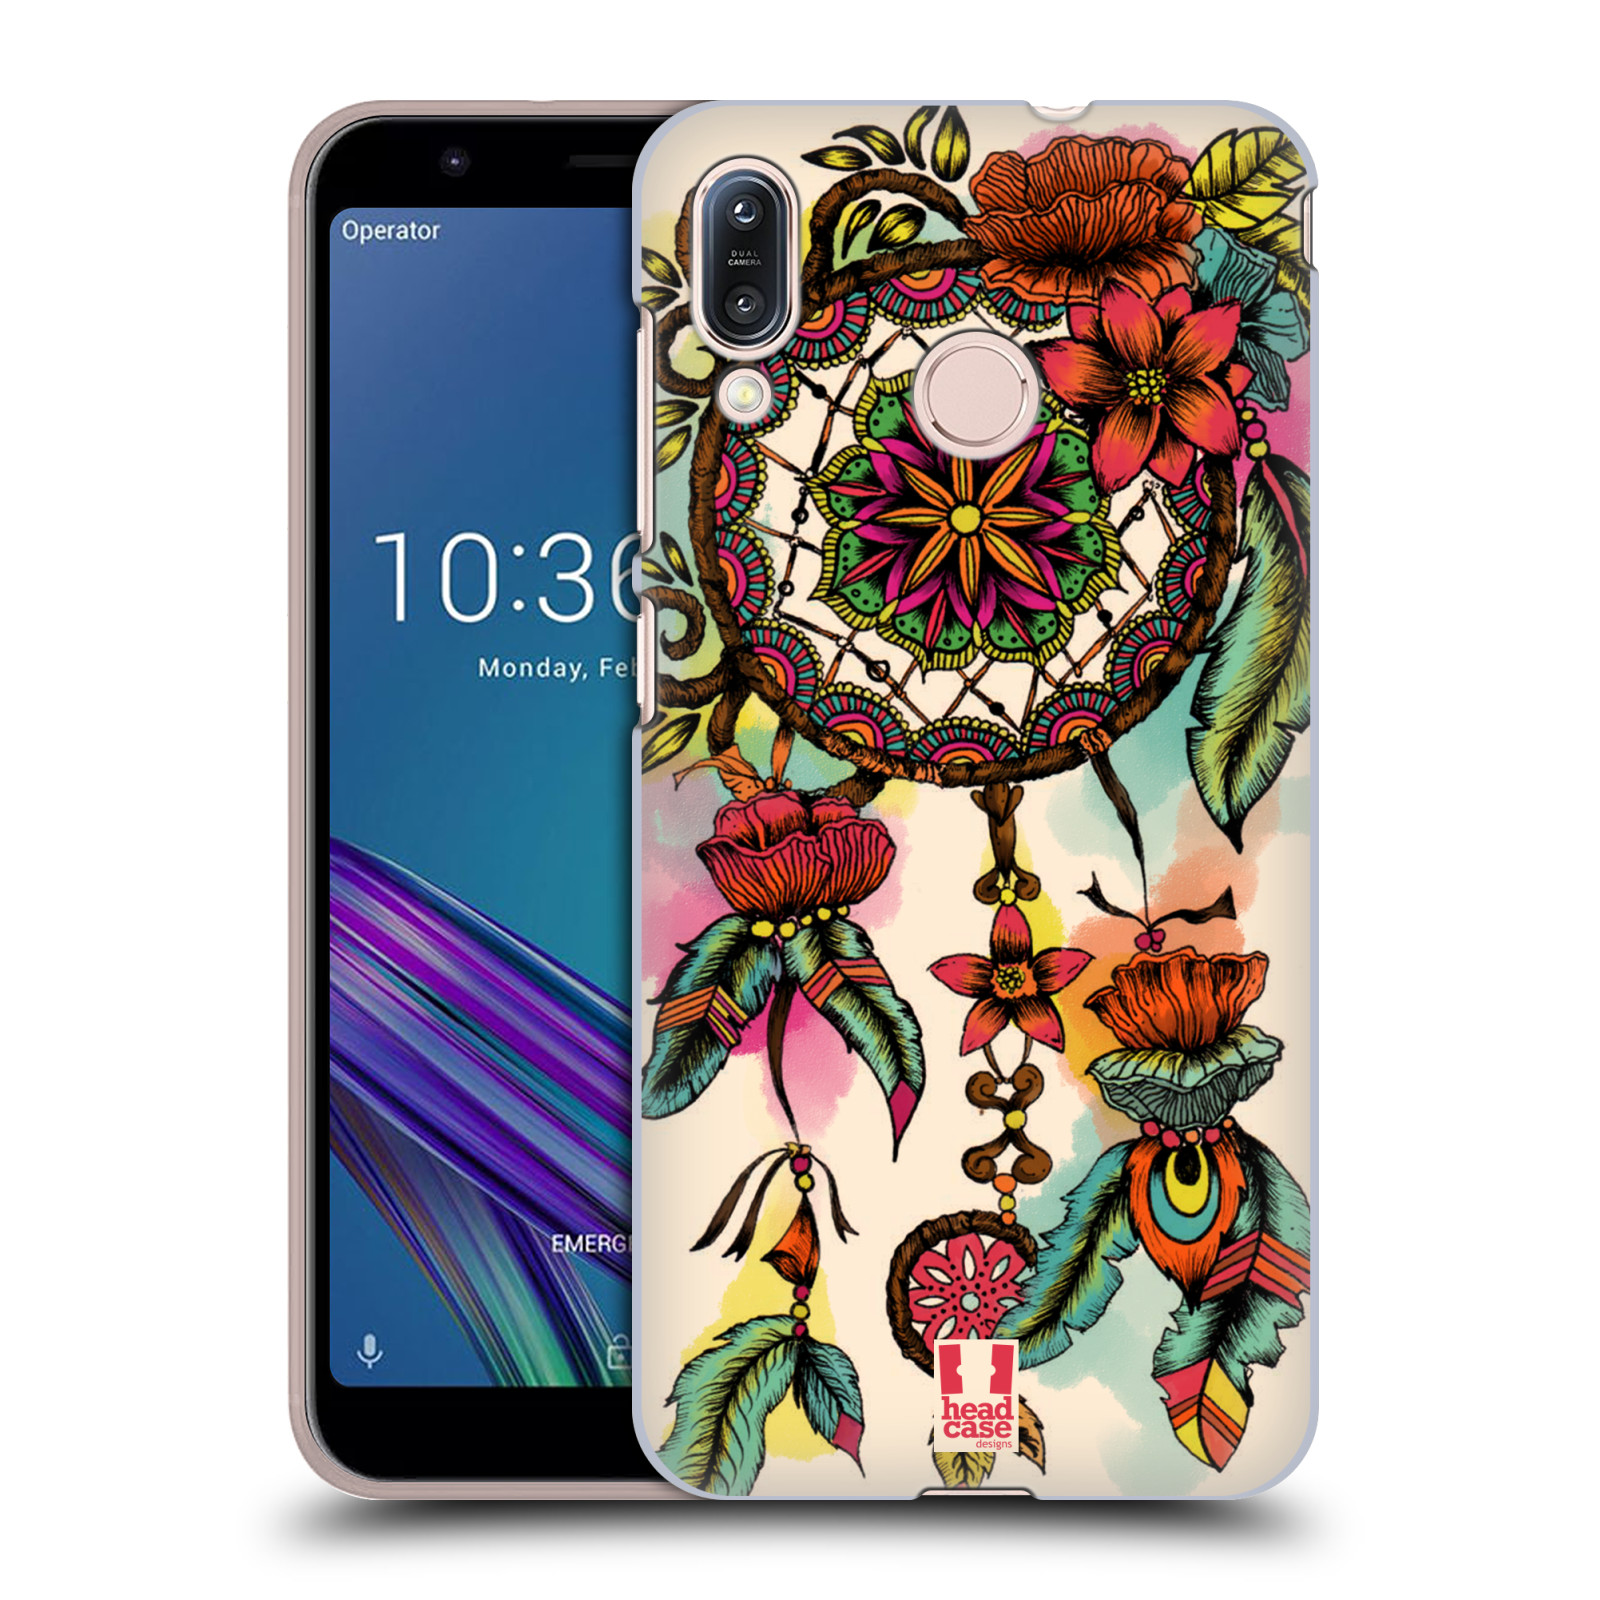 Pouzdro na mobil Asus Zenfone Max M1 (ZB555KL) - HEAD CASE - vzor Květy lapač snů FLORID